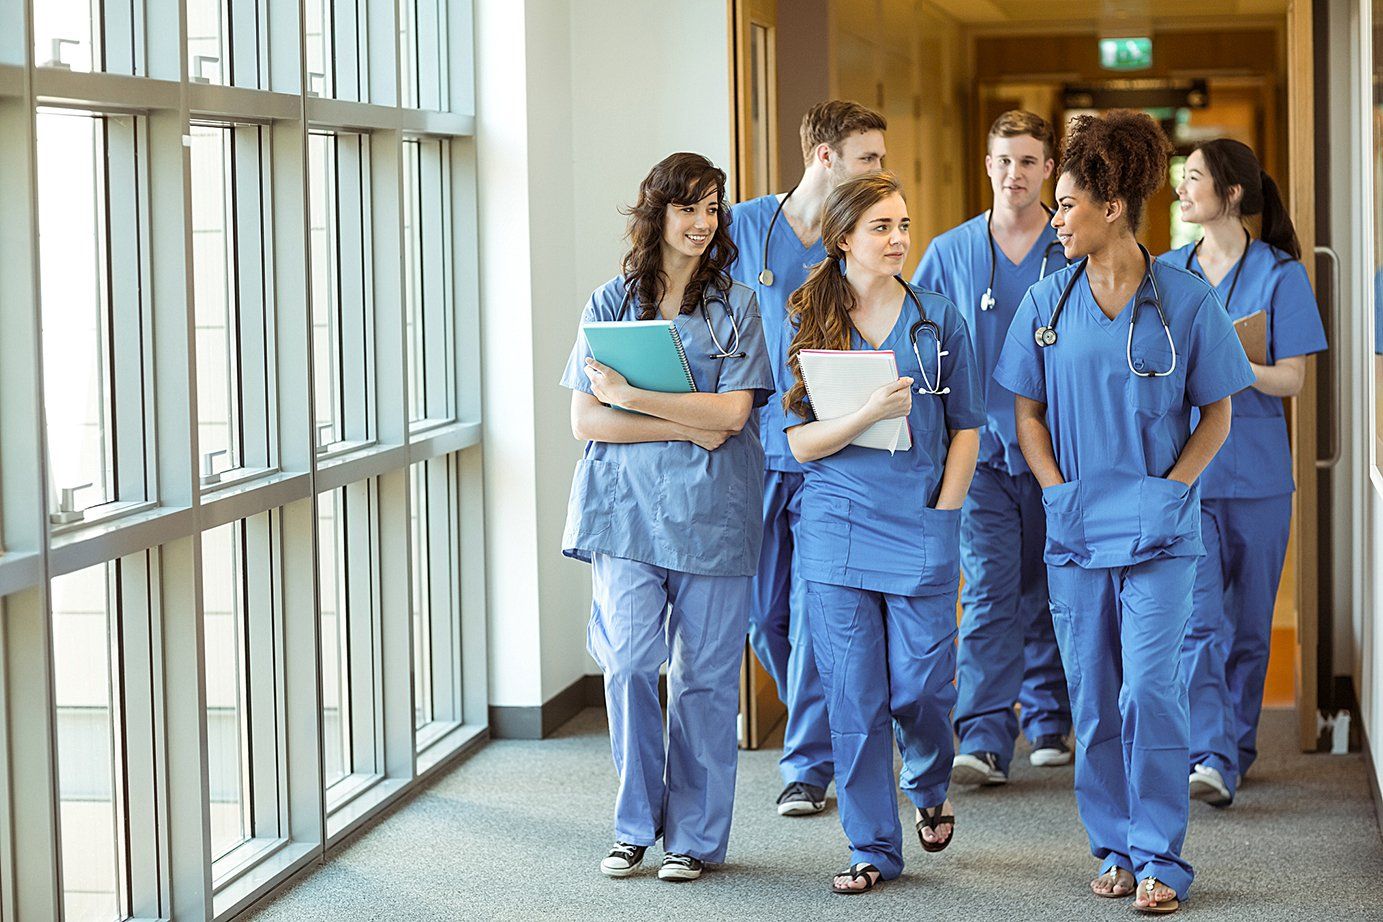 Board of Regents says efforts to improve nursing shortage not enough